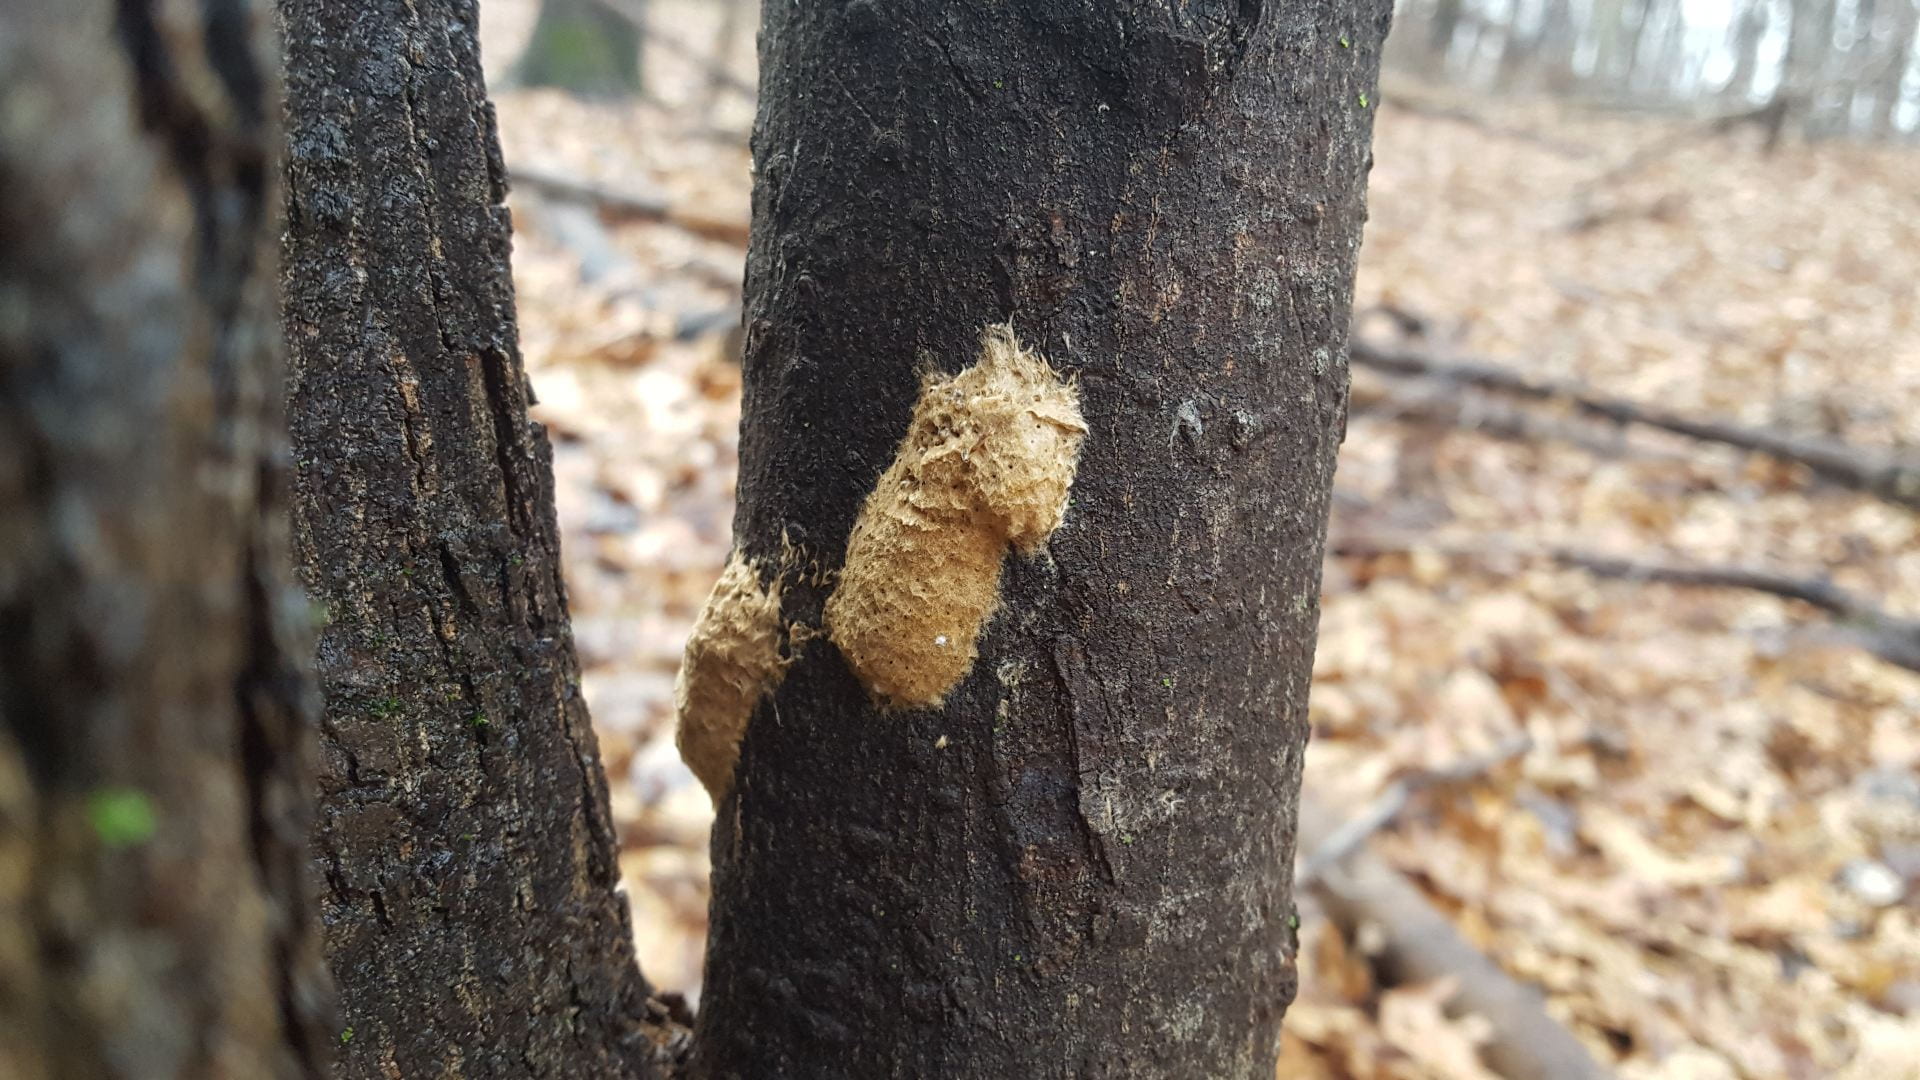 photo shows gypsy moth egg cases on tree bark